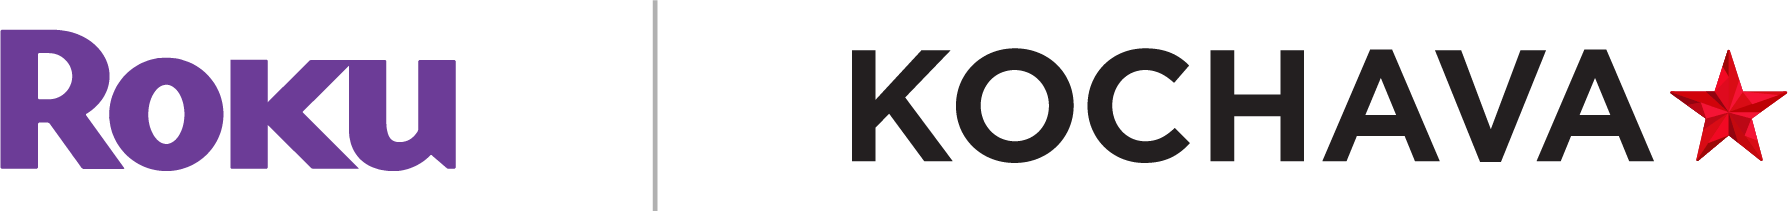 Roku and Kochava logos